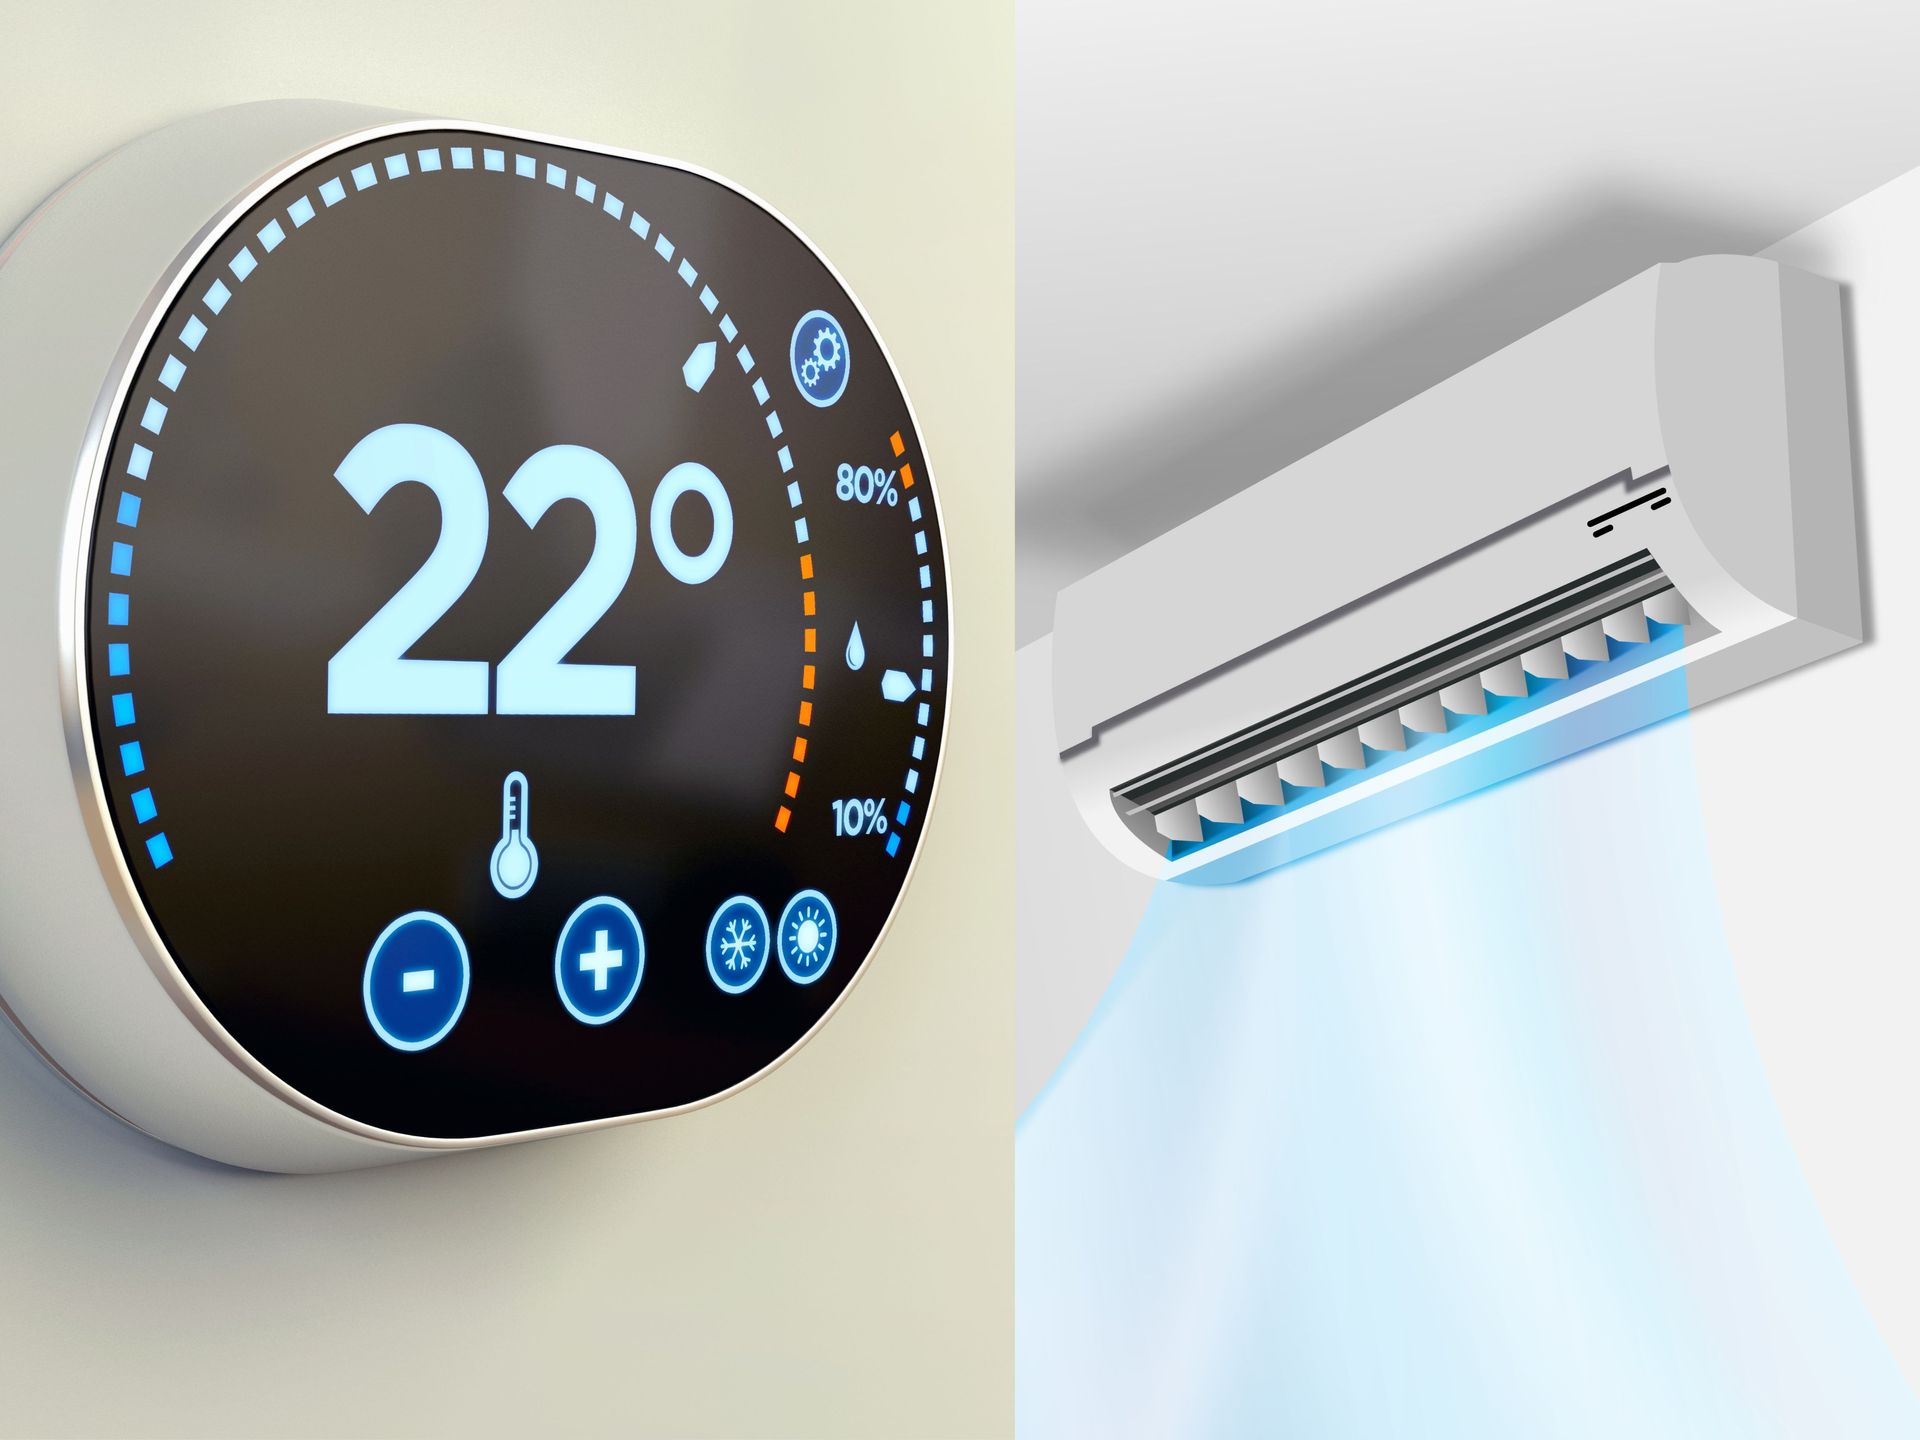 thermostat vs ac